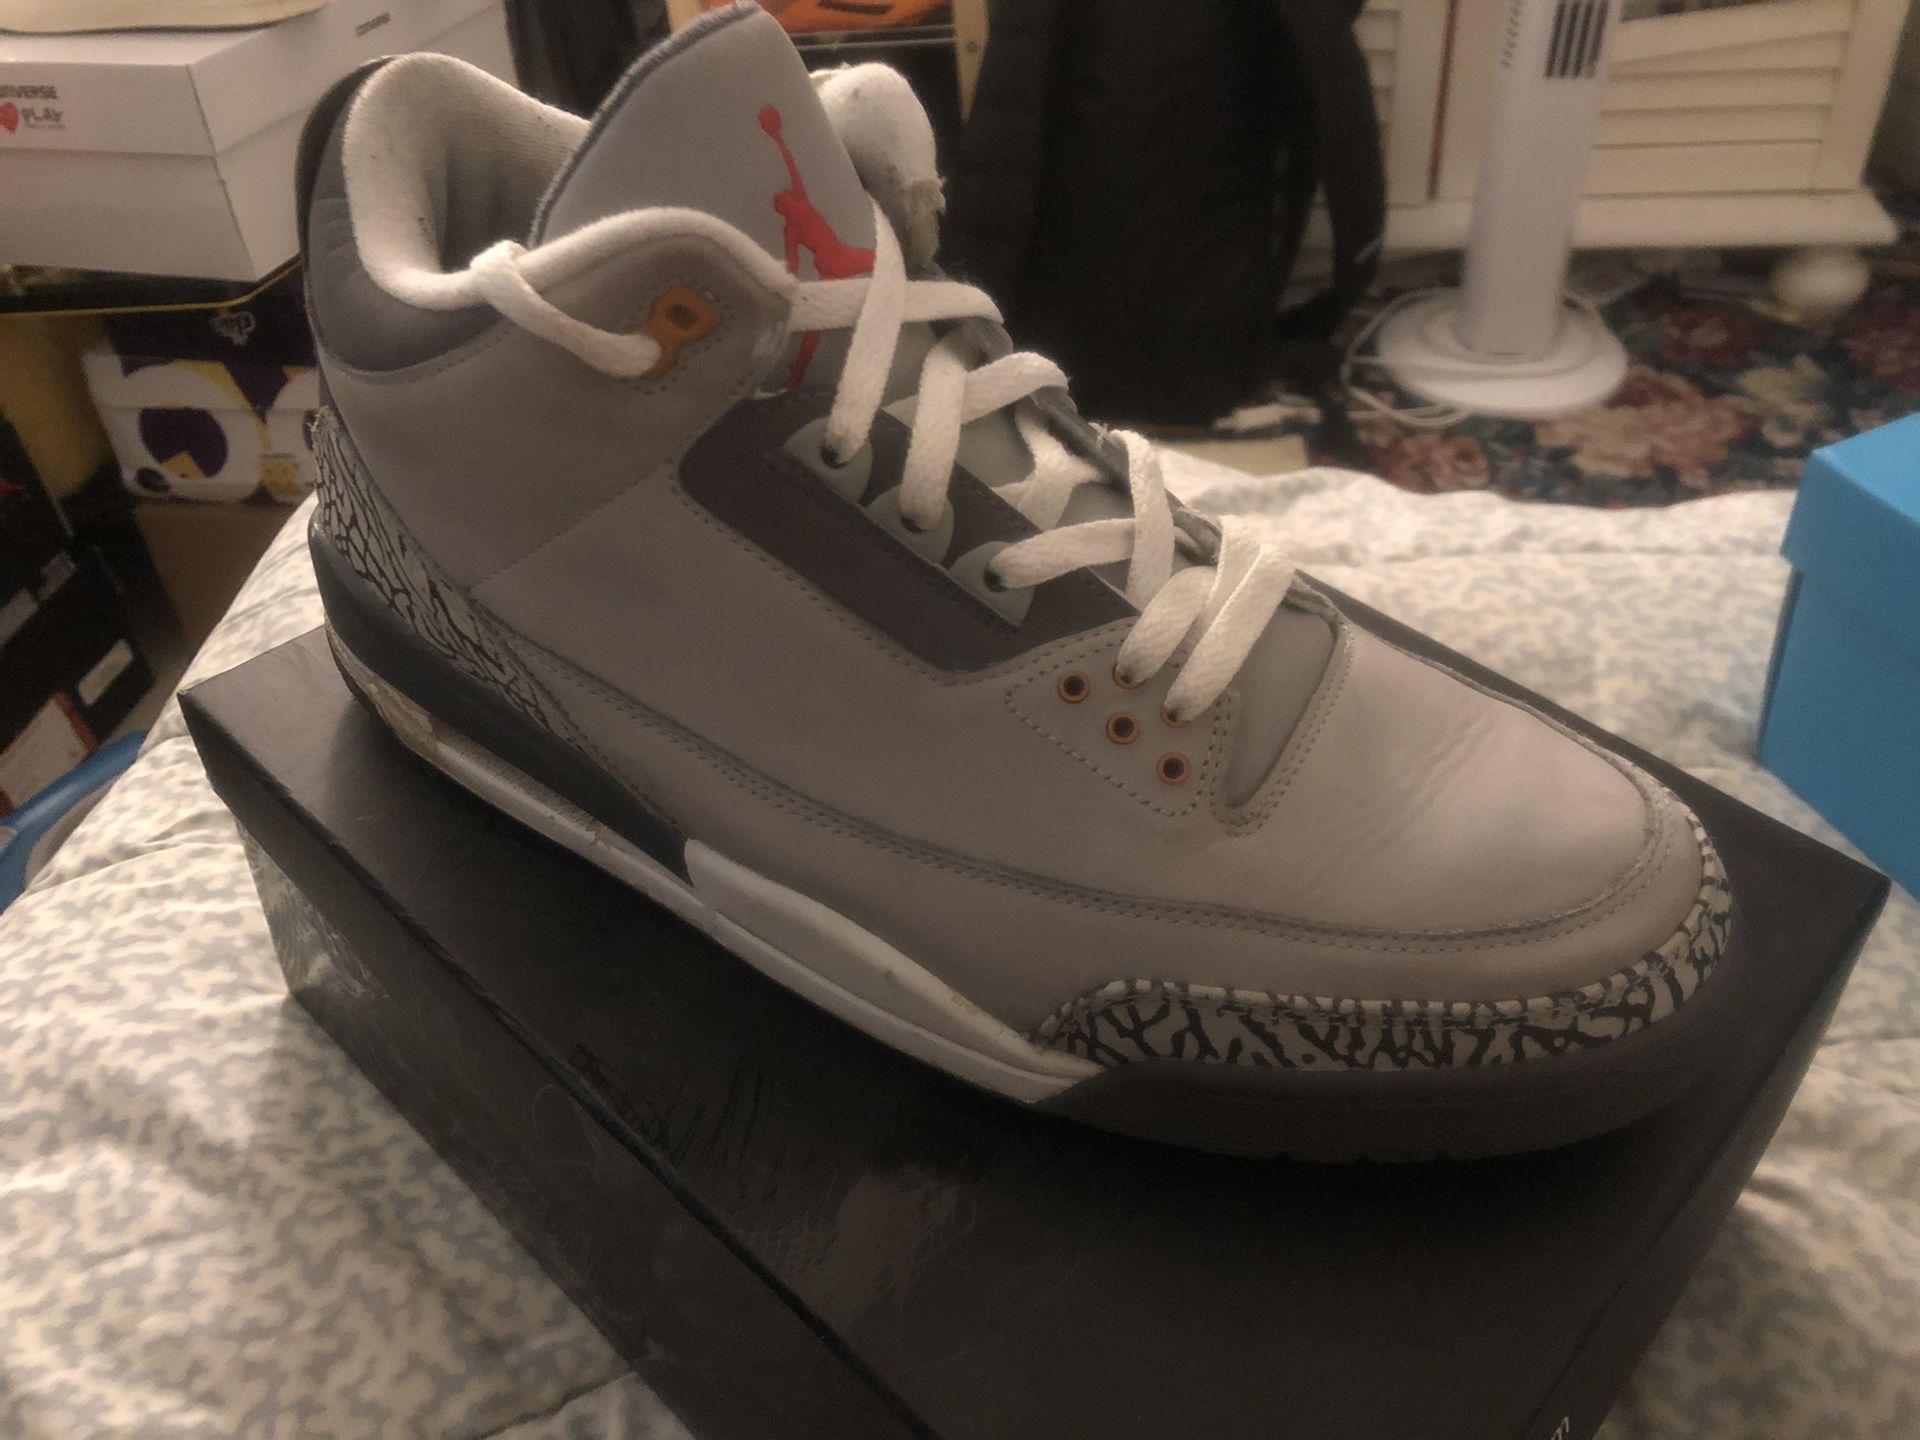 Jordan 3 cool grey size 12